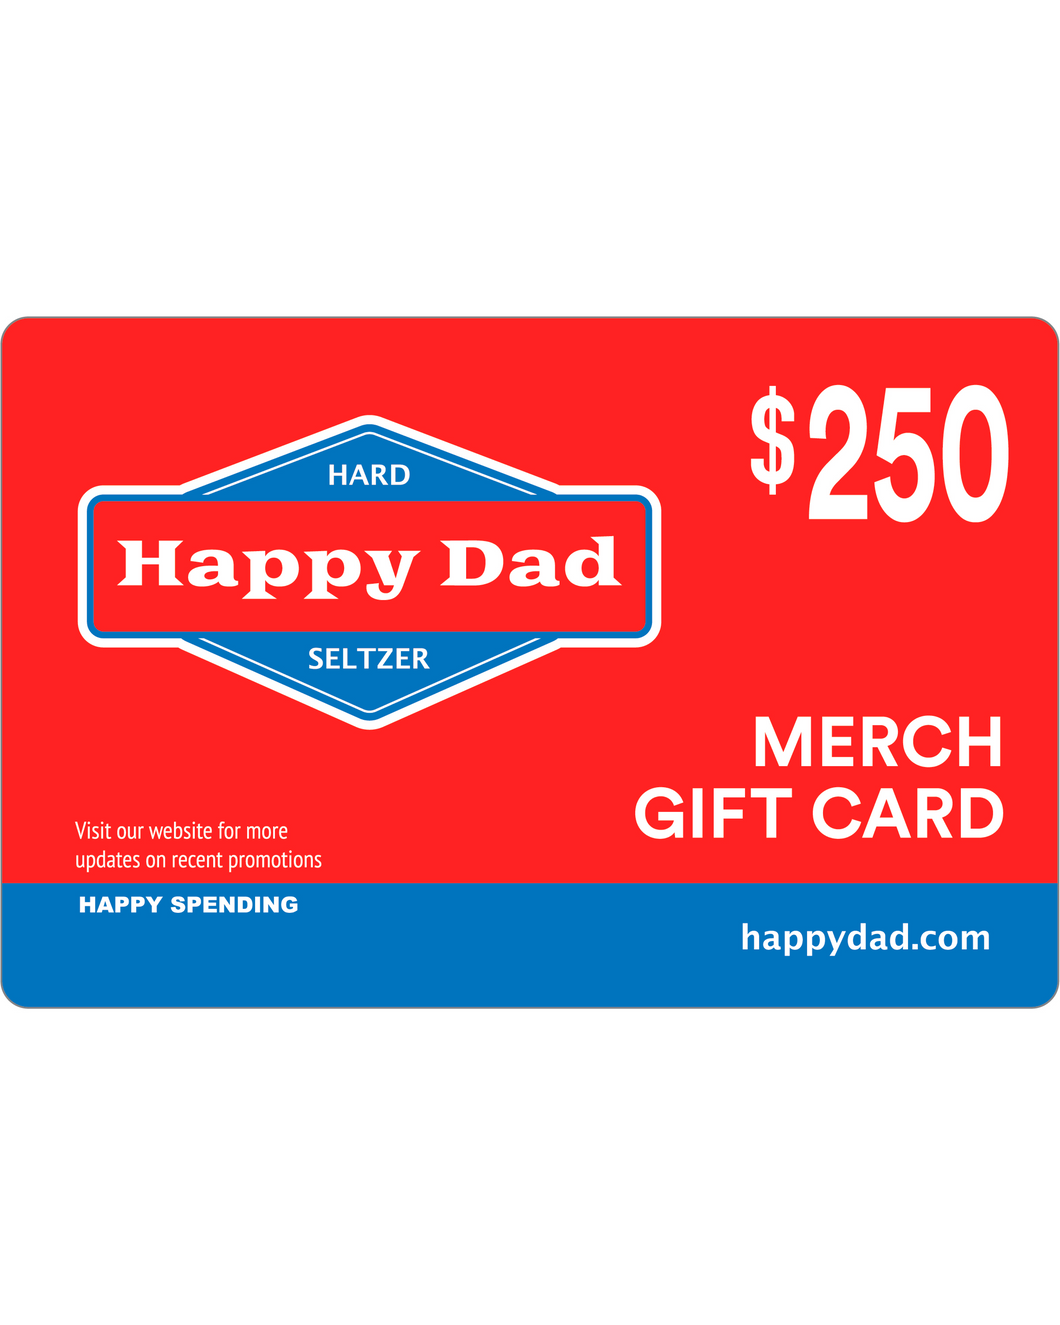 Happy Dad $250 Merch Gift Card